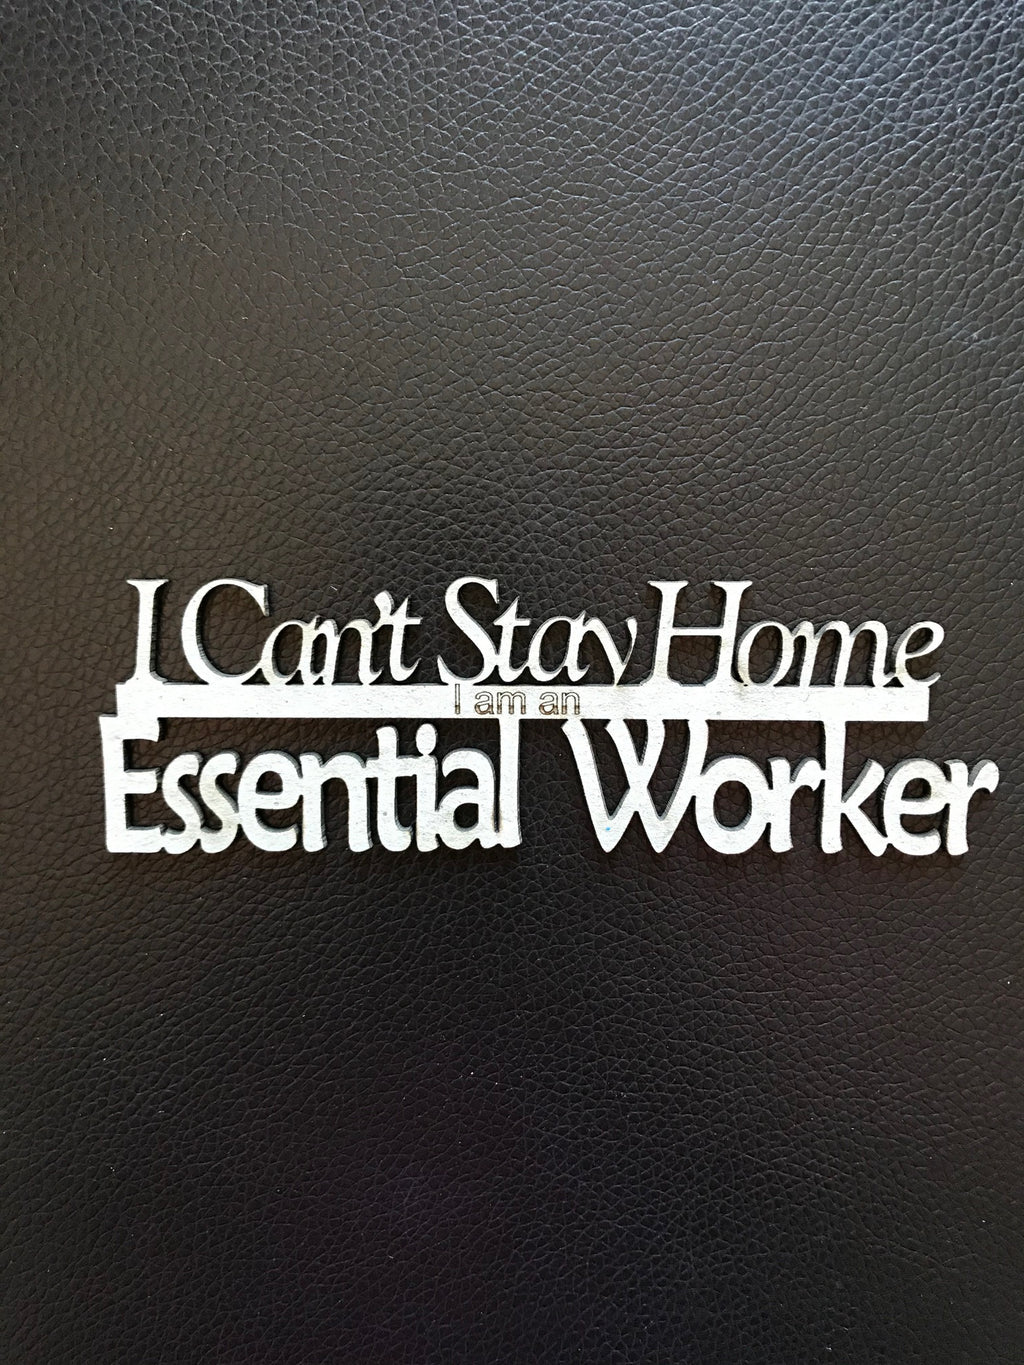 2Crafty - Essential Worker Title